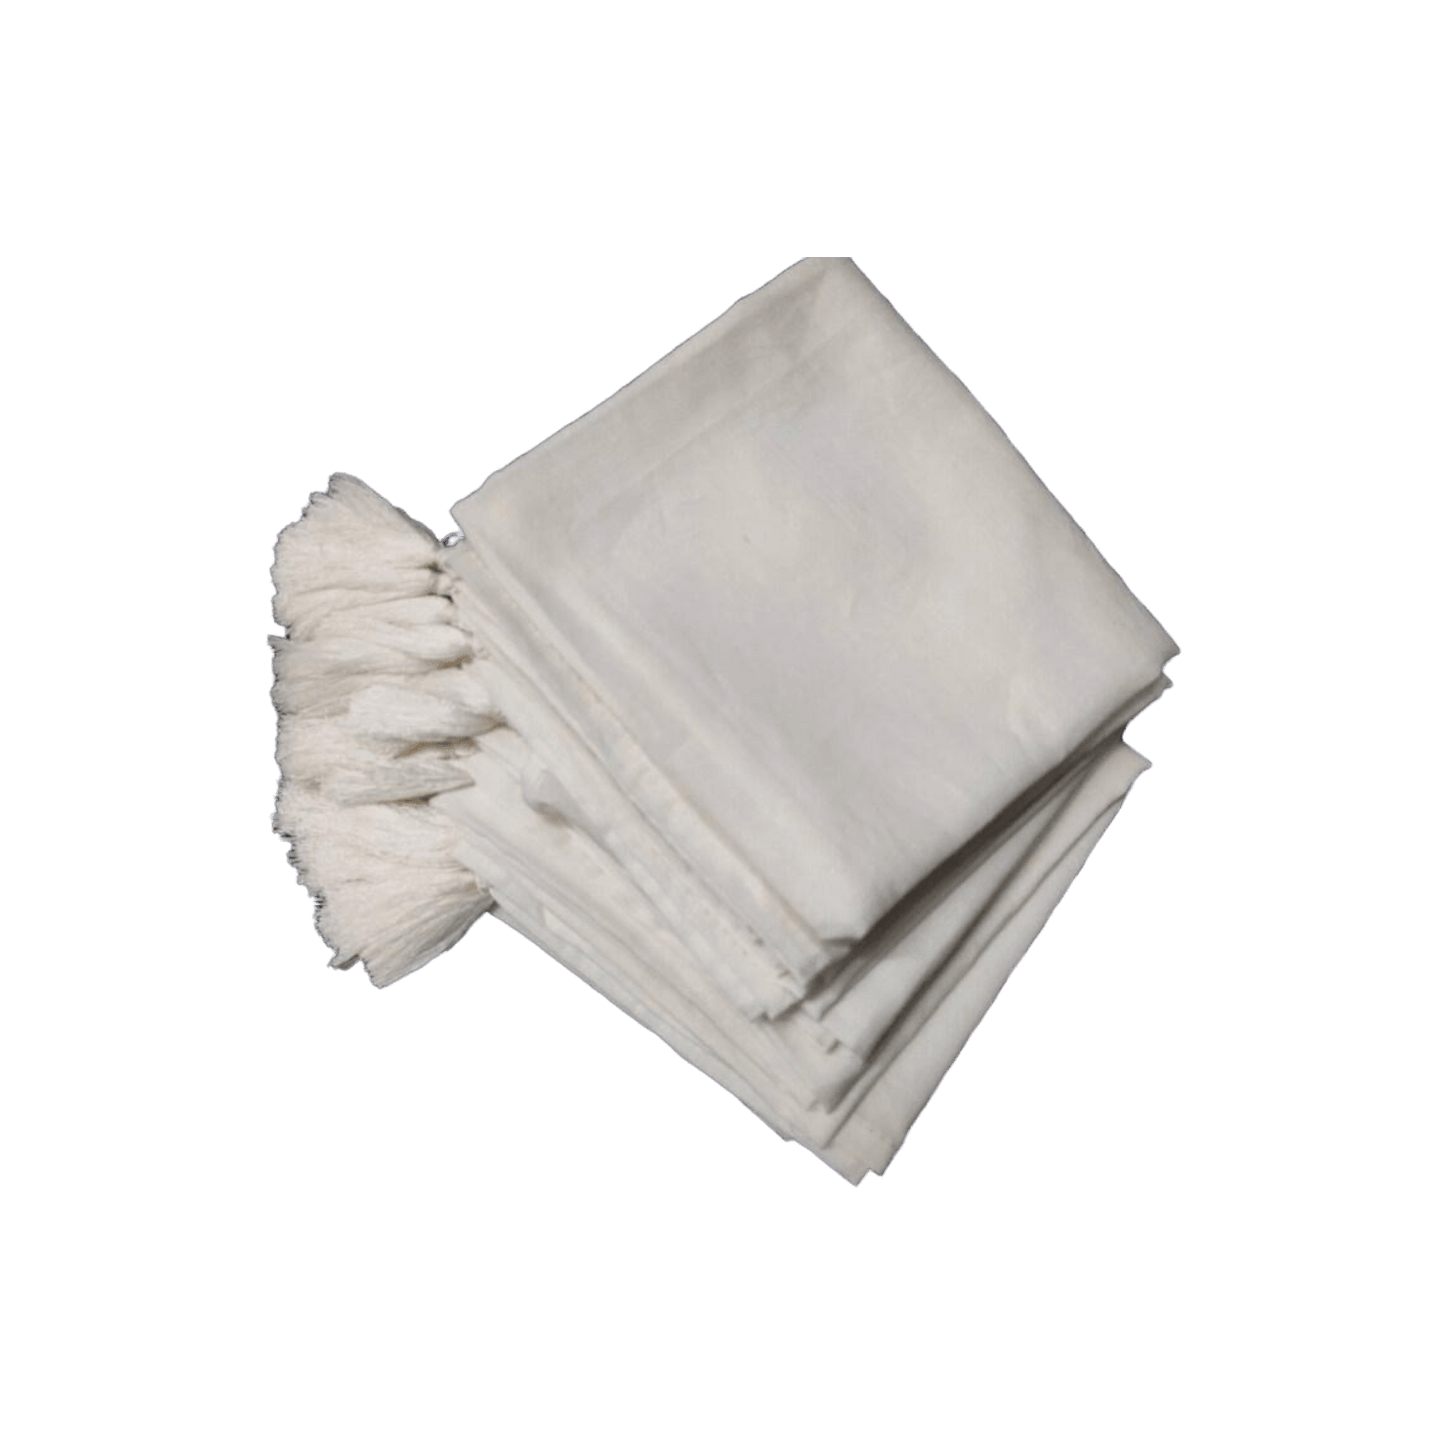 6 White Cotton Napkins with Tassel - MAIA HOMES